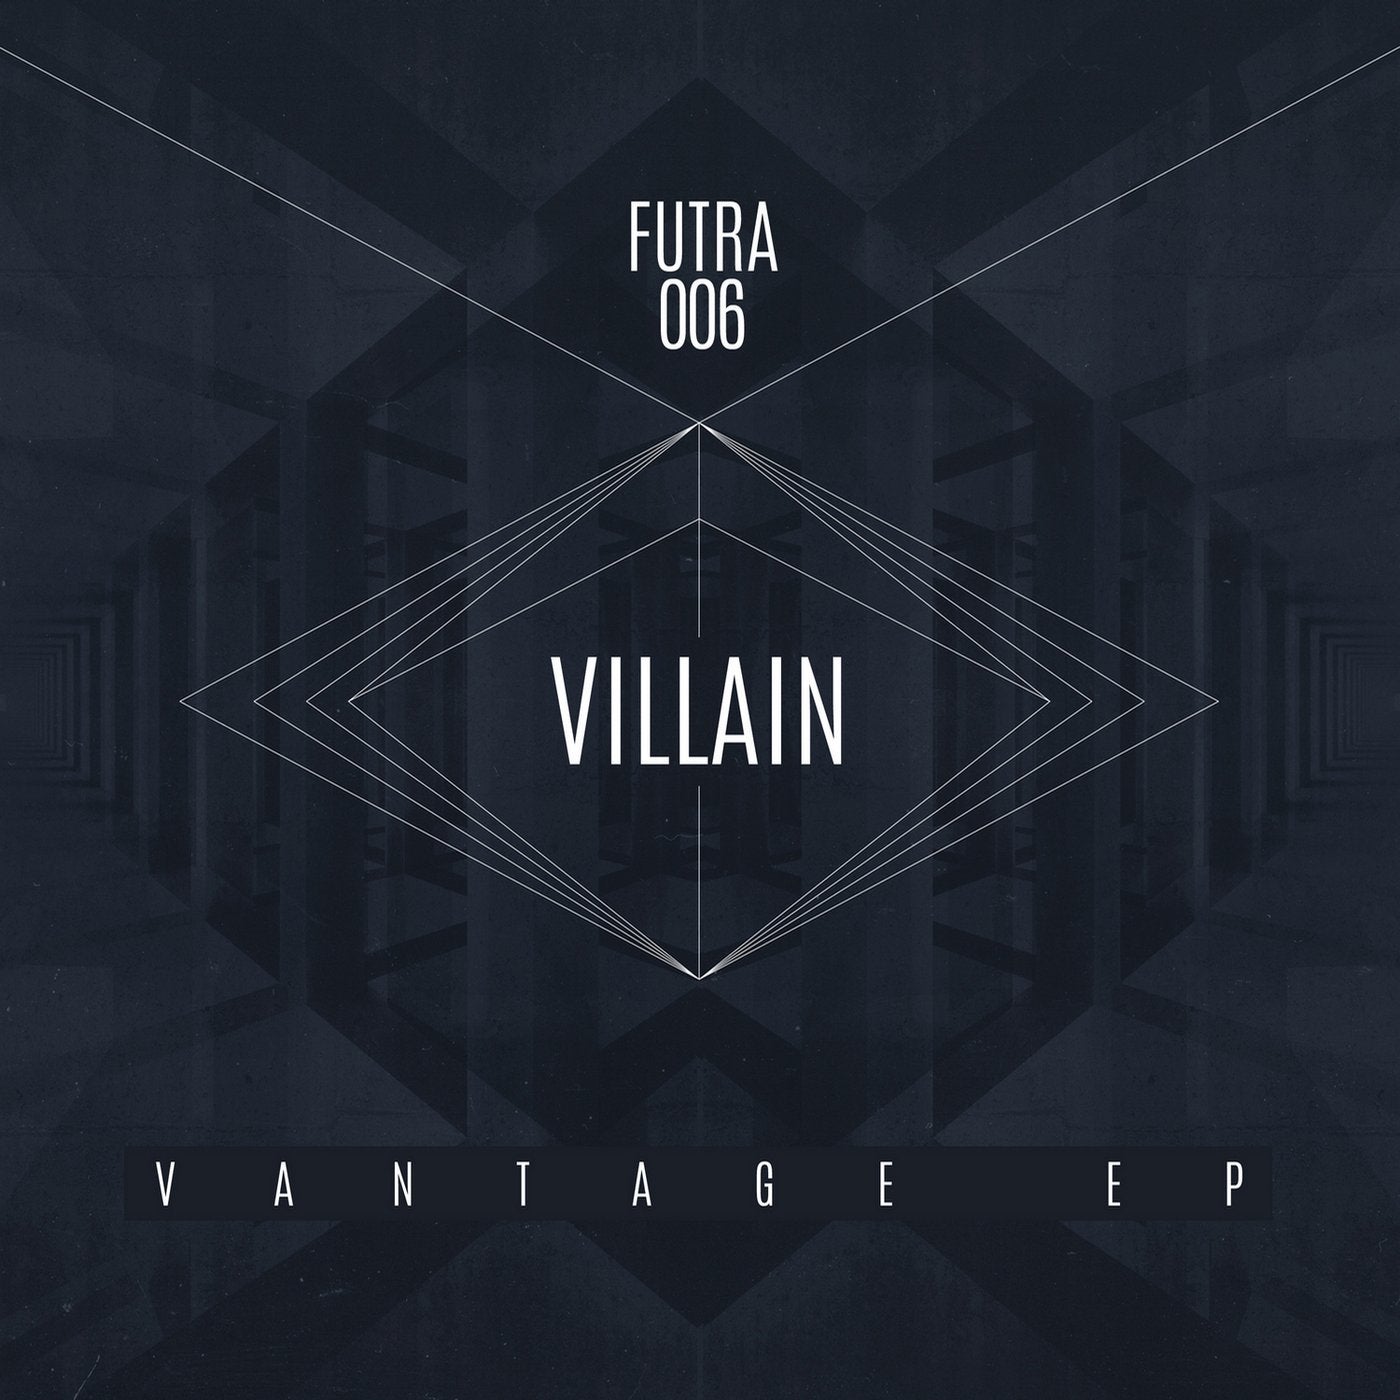 Futra 006: Villain - Vantage EP